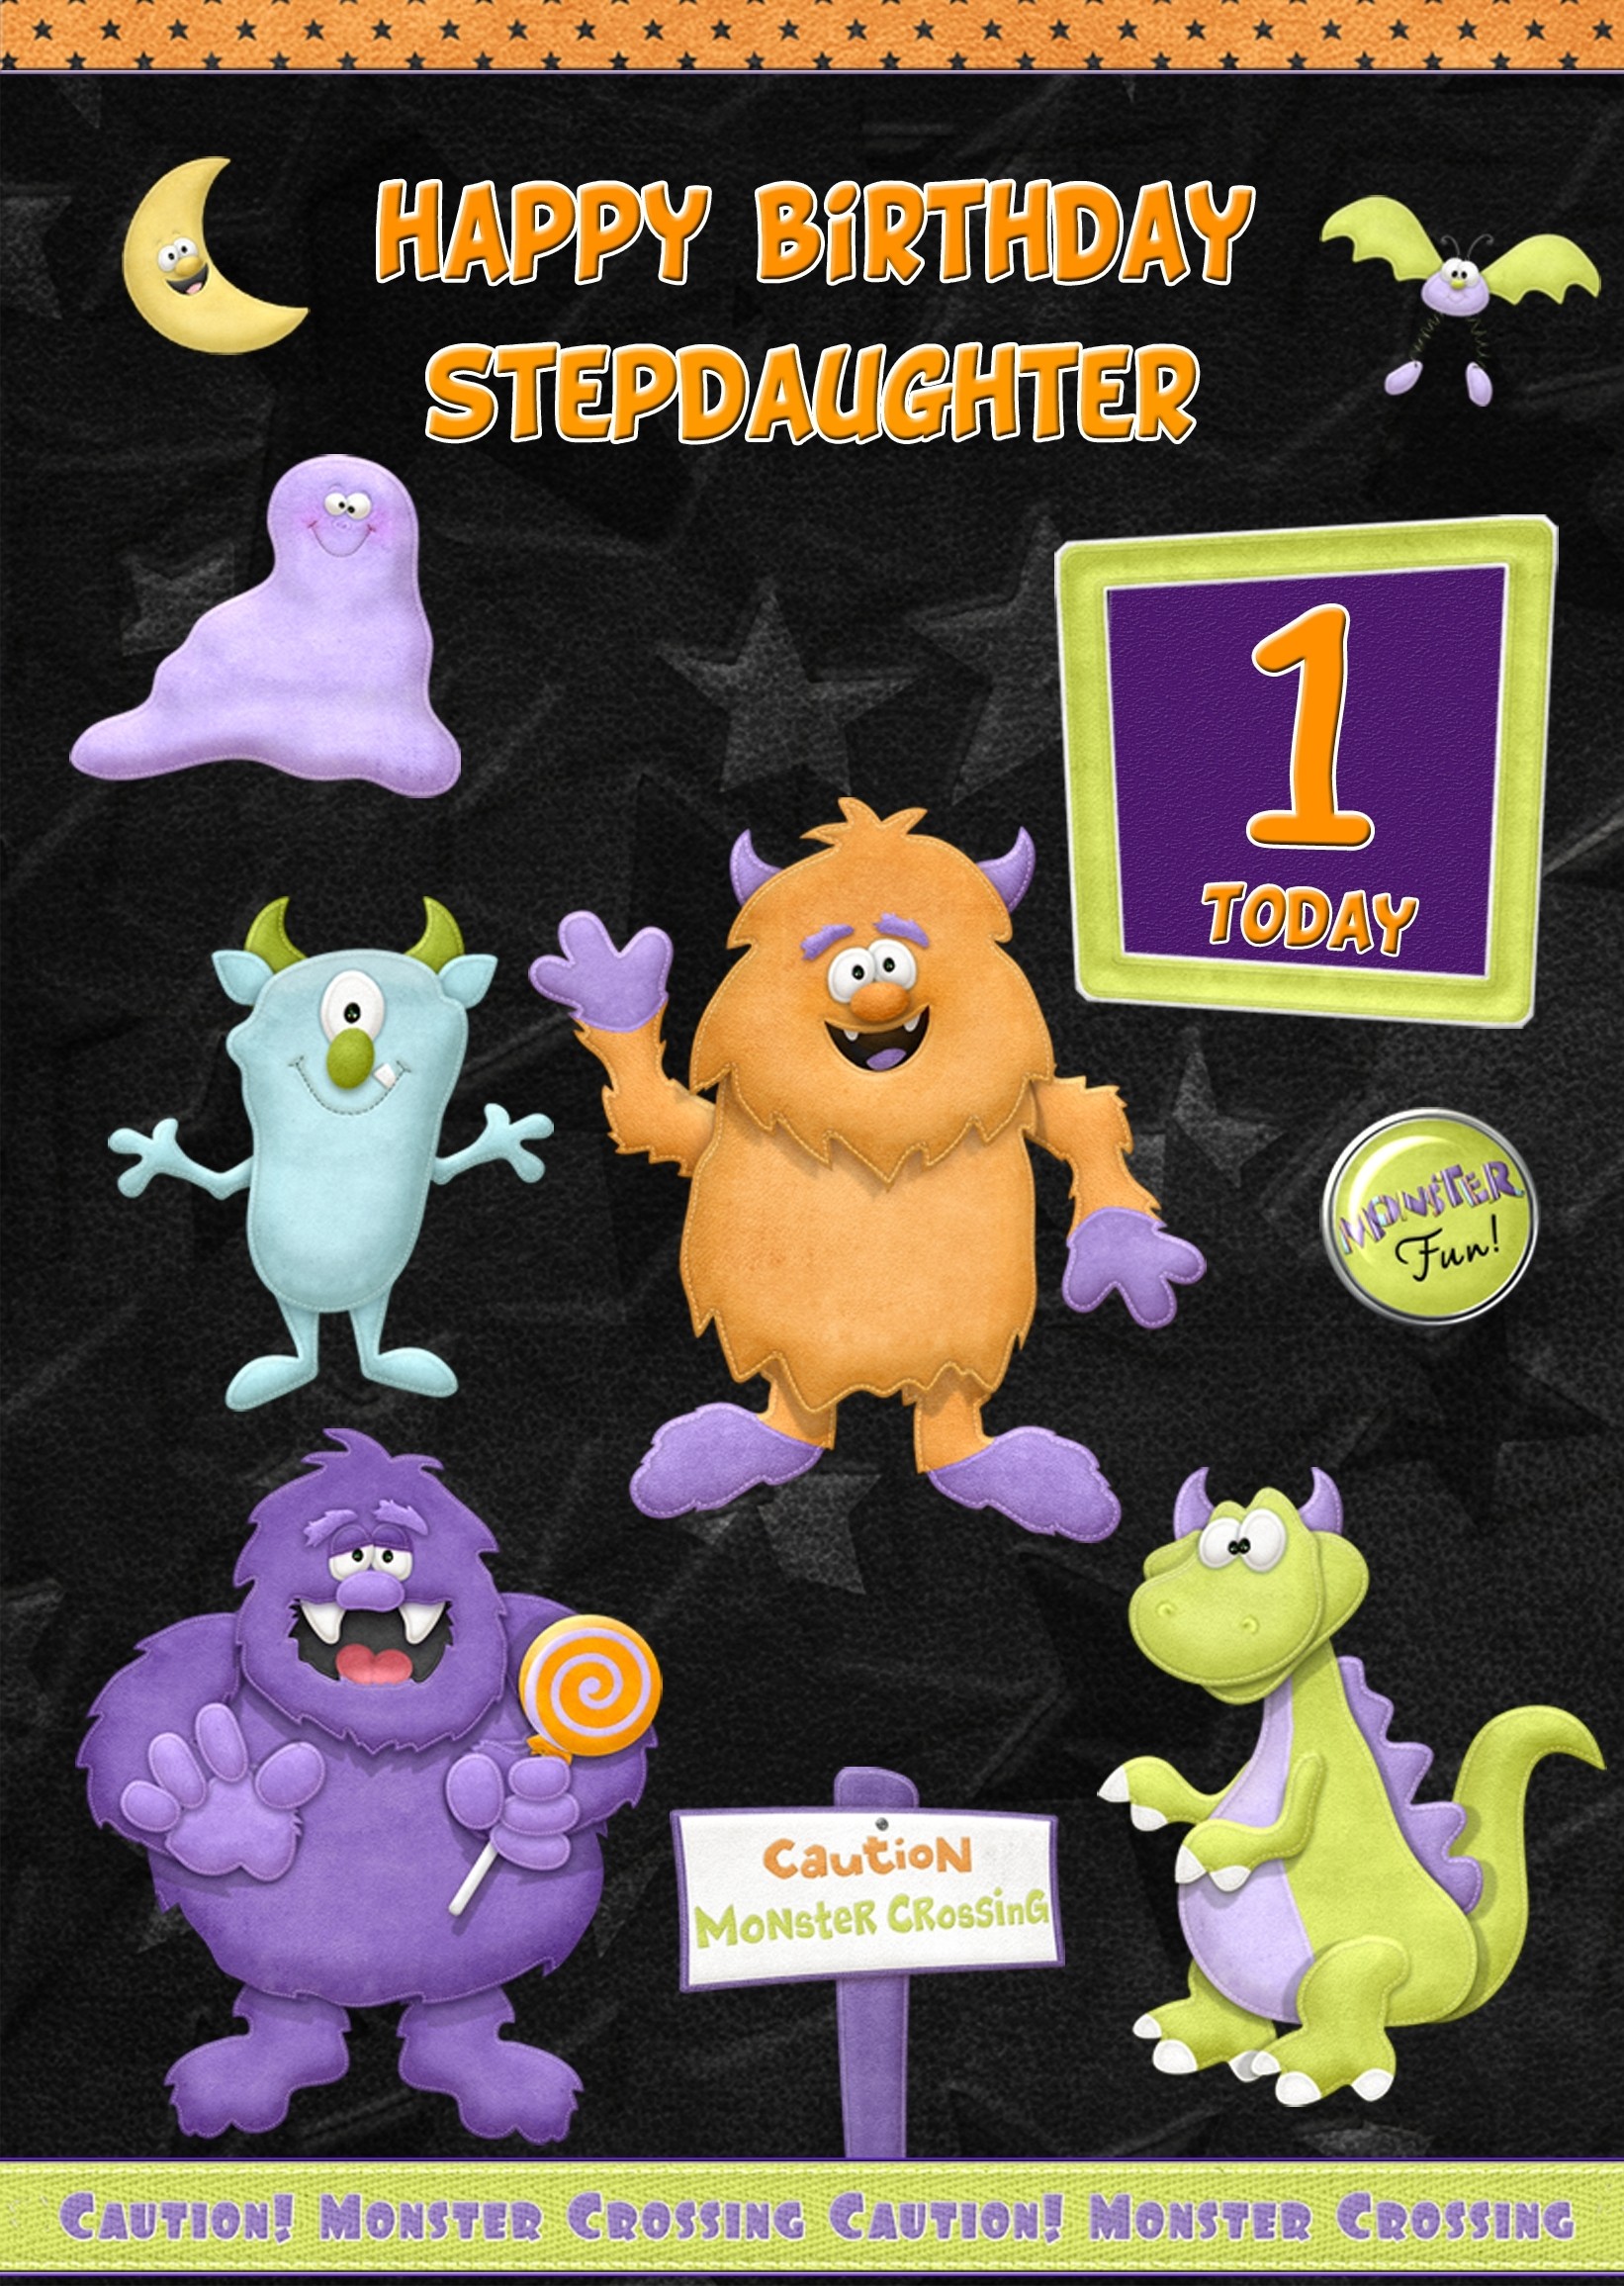 Kids 1st Birthday Funny Monster Cartoon Card for Stepdaughter